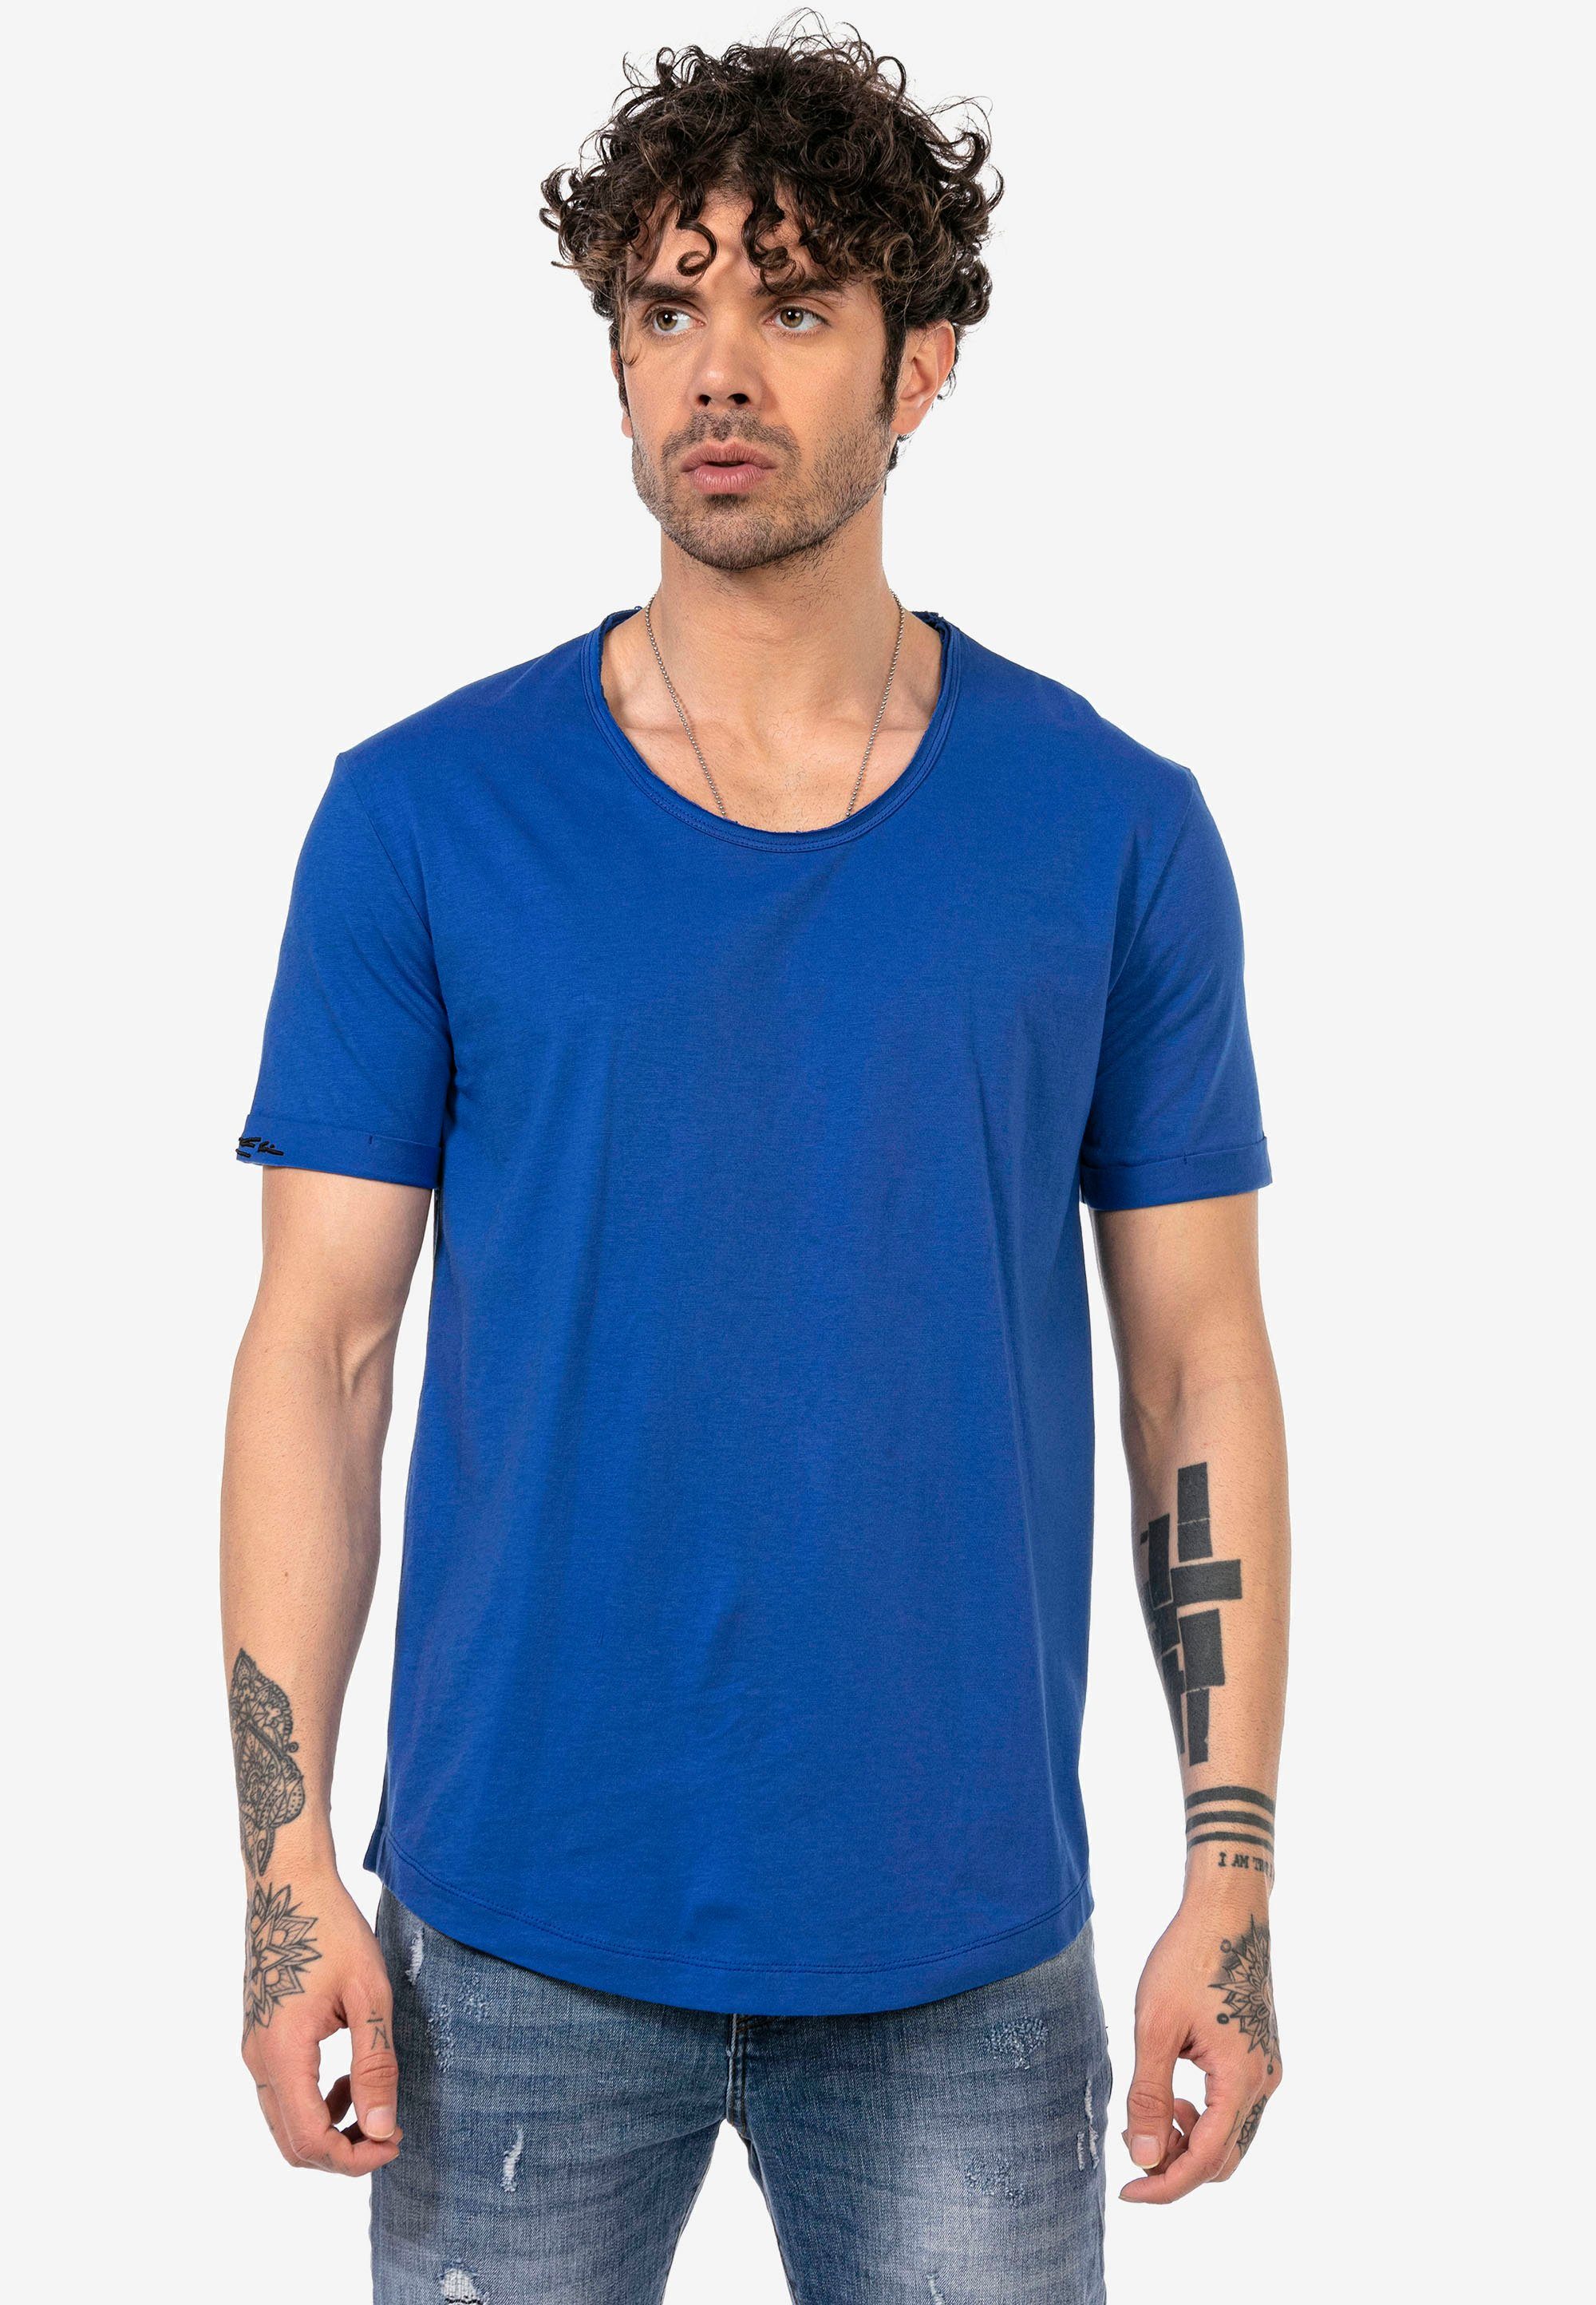 mit Cruces T-Shirt tollem Tragekomfort RedBridge blau Las